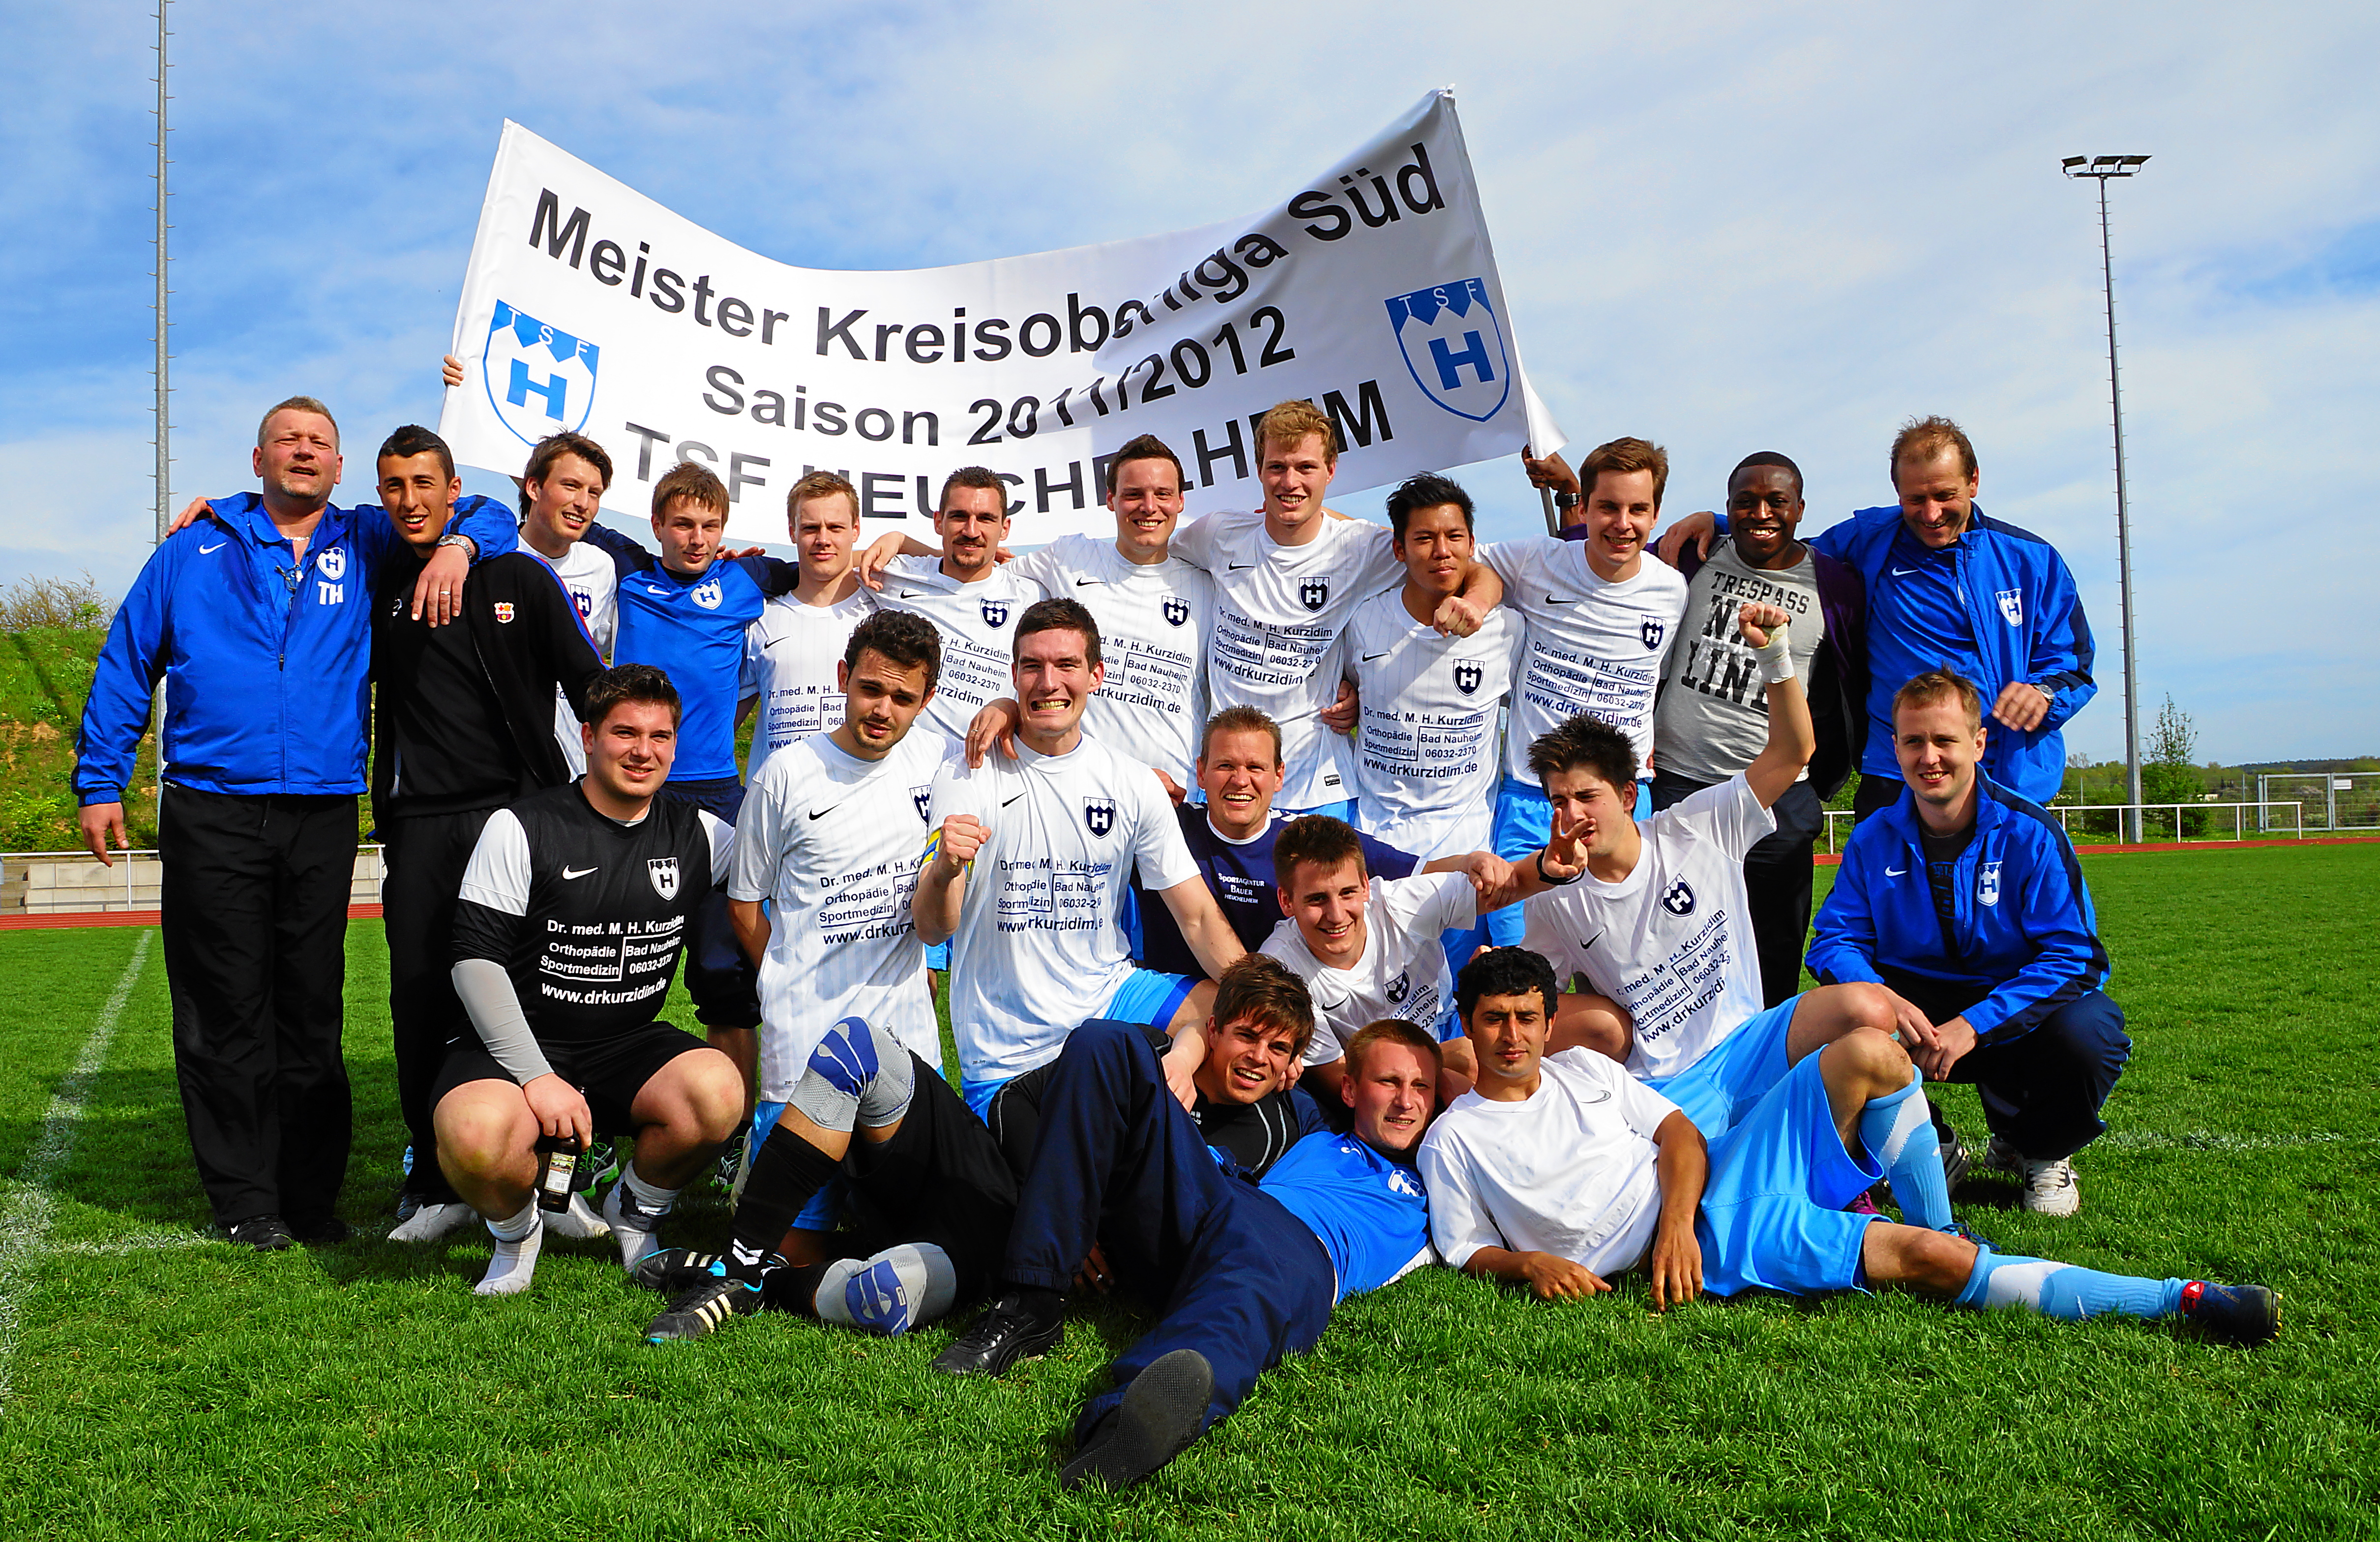 Meister Kreisoberliga 2012